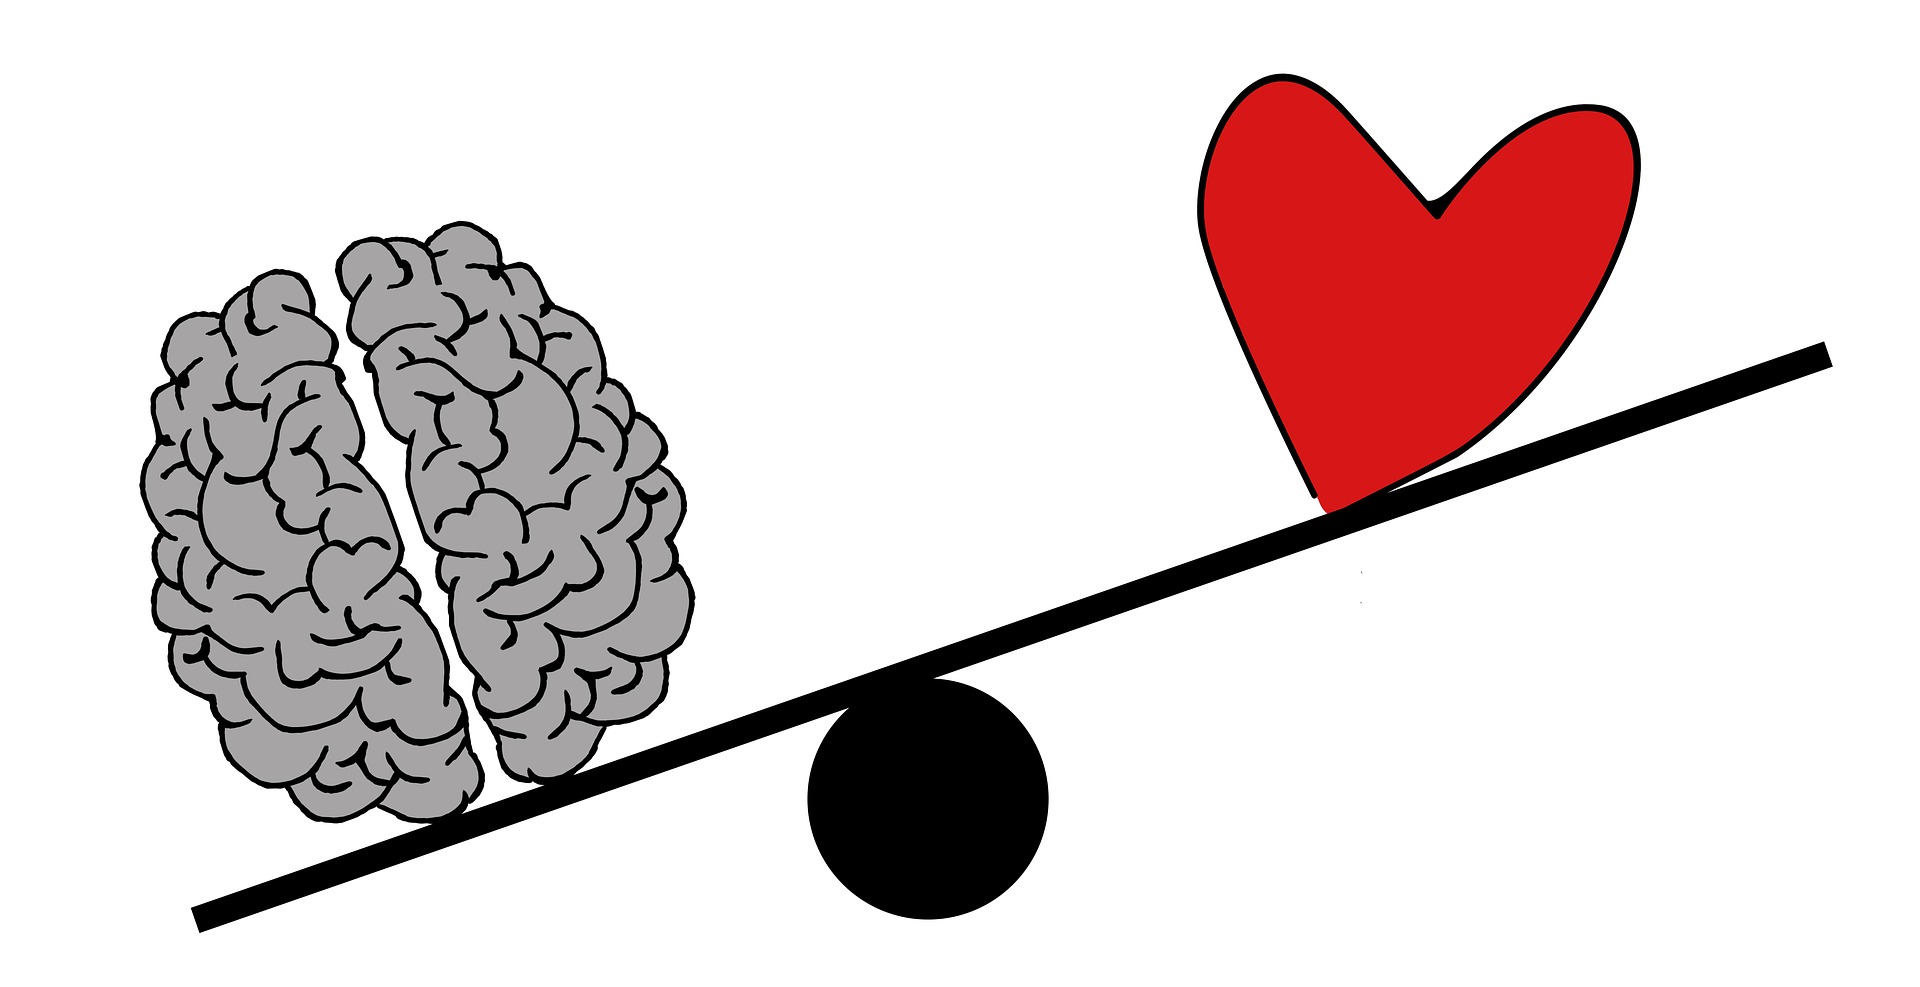 Libra: Brain vs. Heart